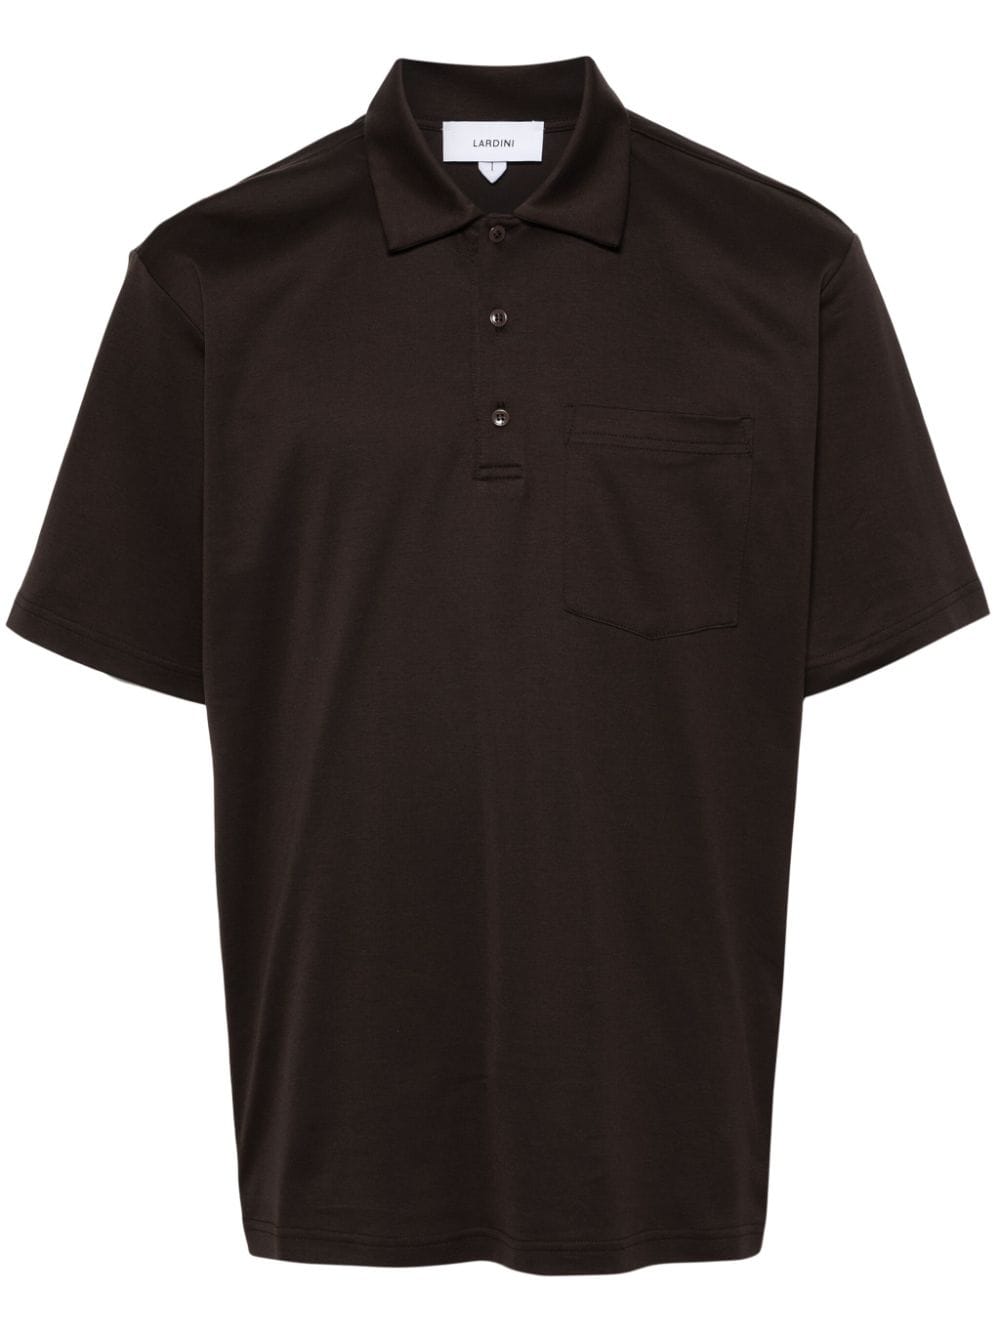 Lardini jersey cotton polo shirt - Brown von Lardini